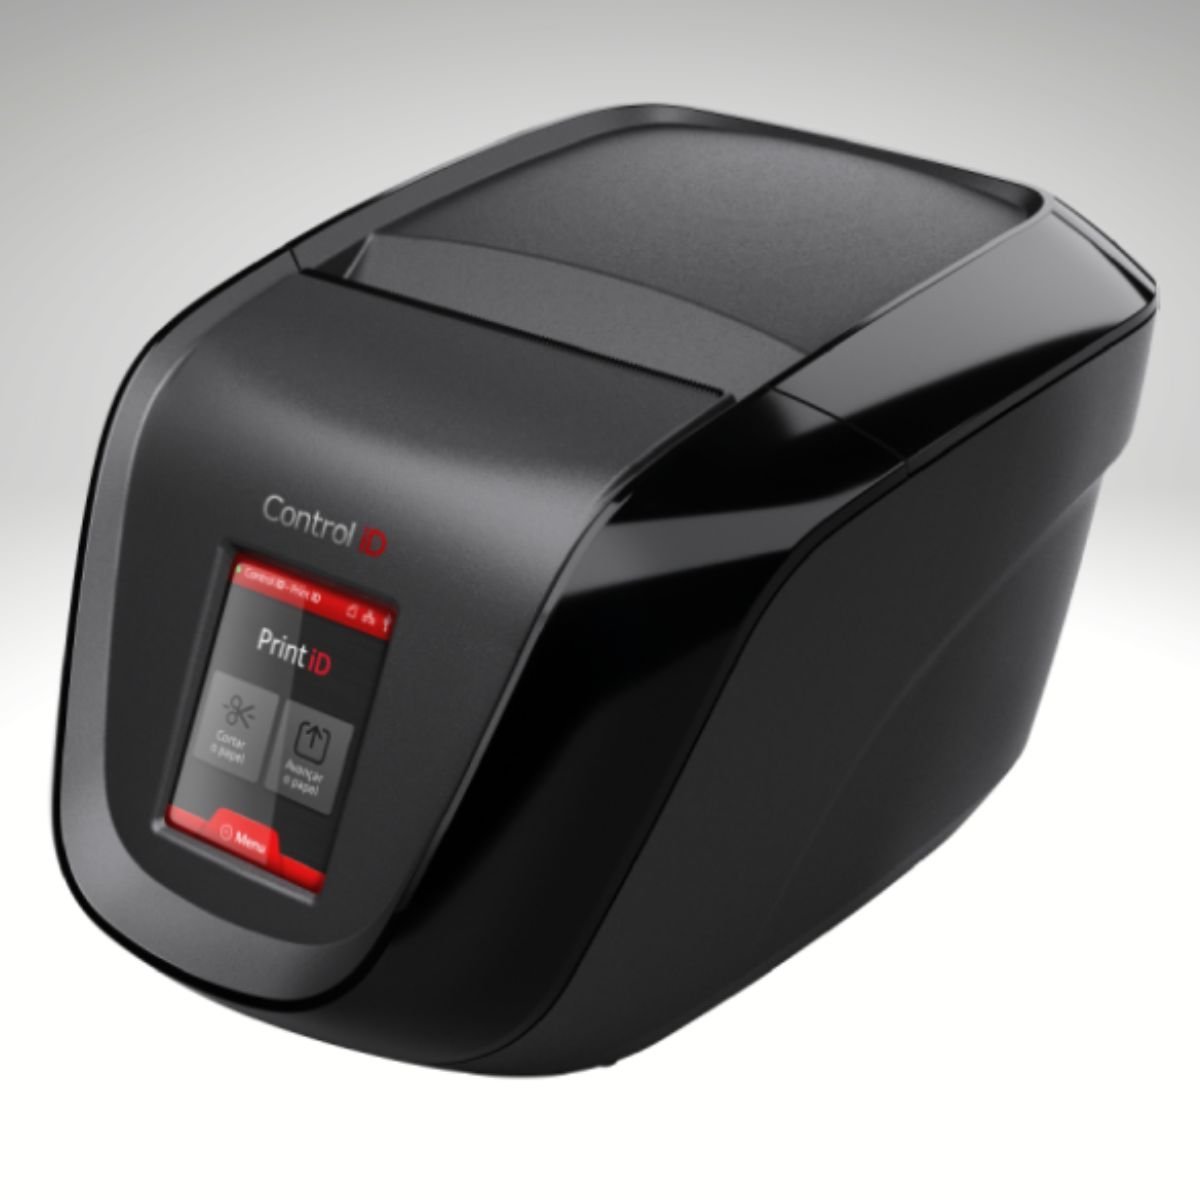 Impressora Térmica Cupom Touch USB/Rede/Wi-Fi/Bluetooth - Control iD Print iD Touch